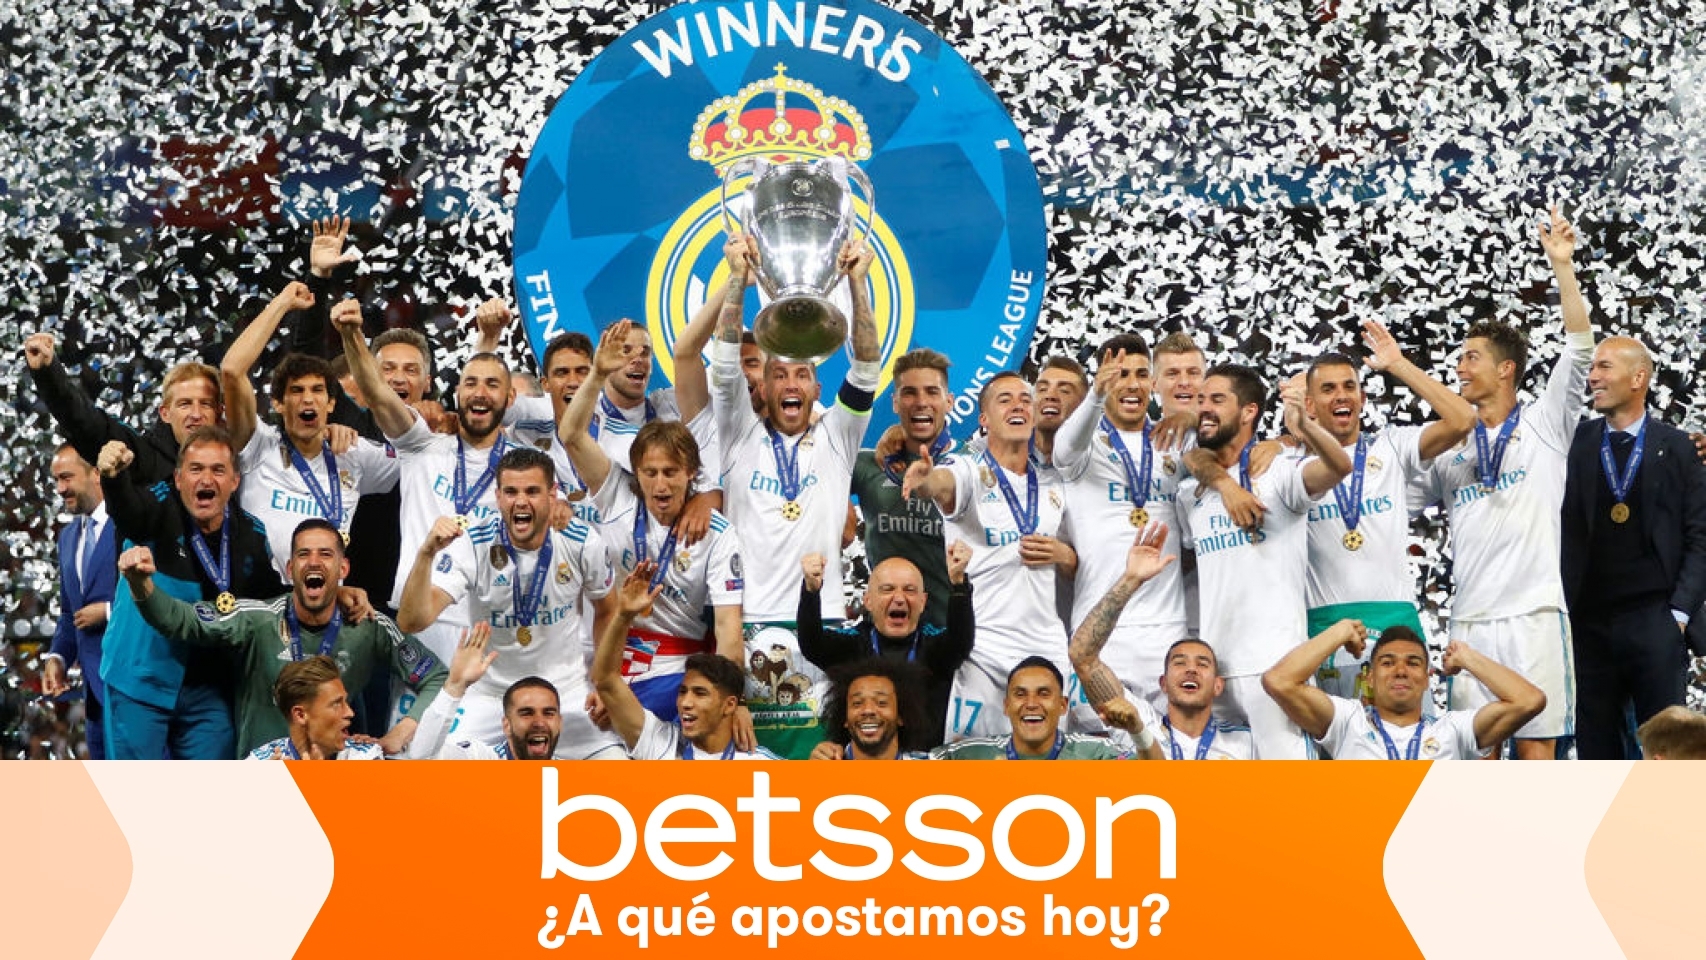 Gana 190 euros si el Real Madrid gana en 2020 la Champions League